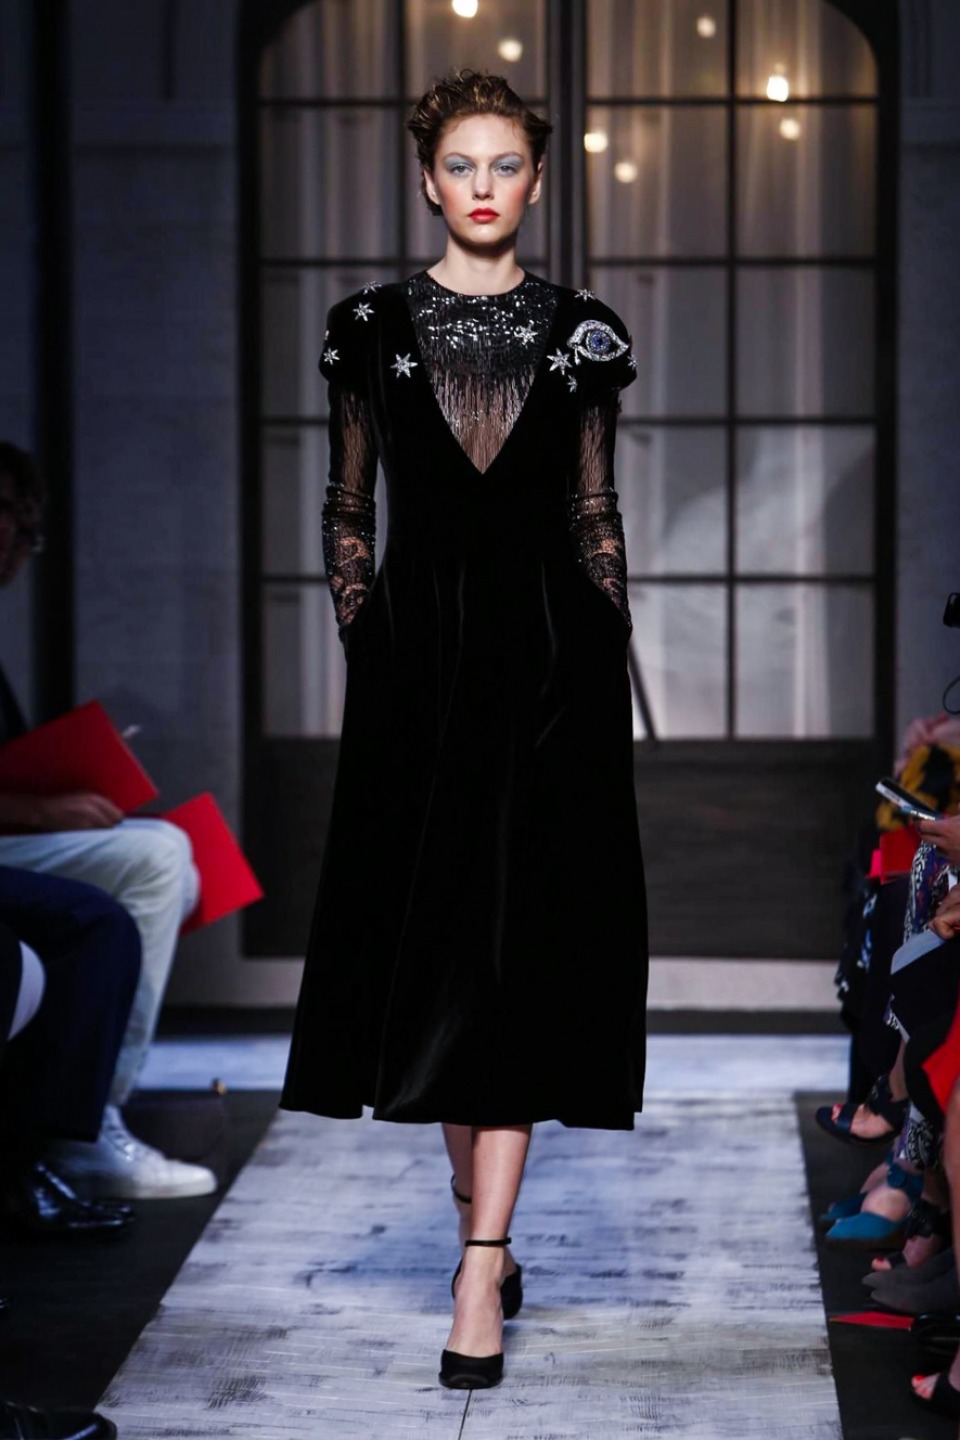 All about Fashion: Schiaparelli Haute Couture A/W 2015-2016 Collection ...